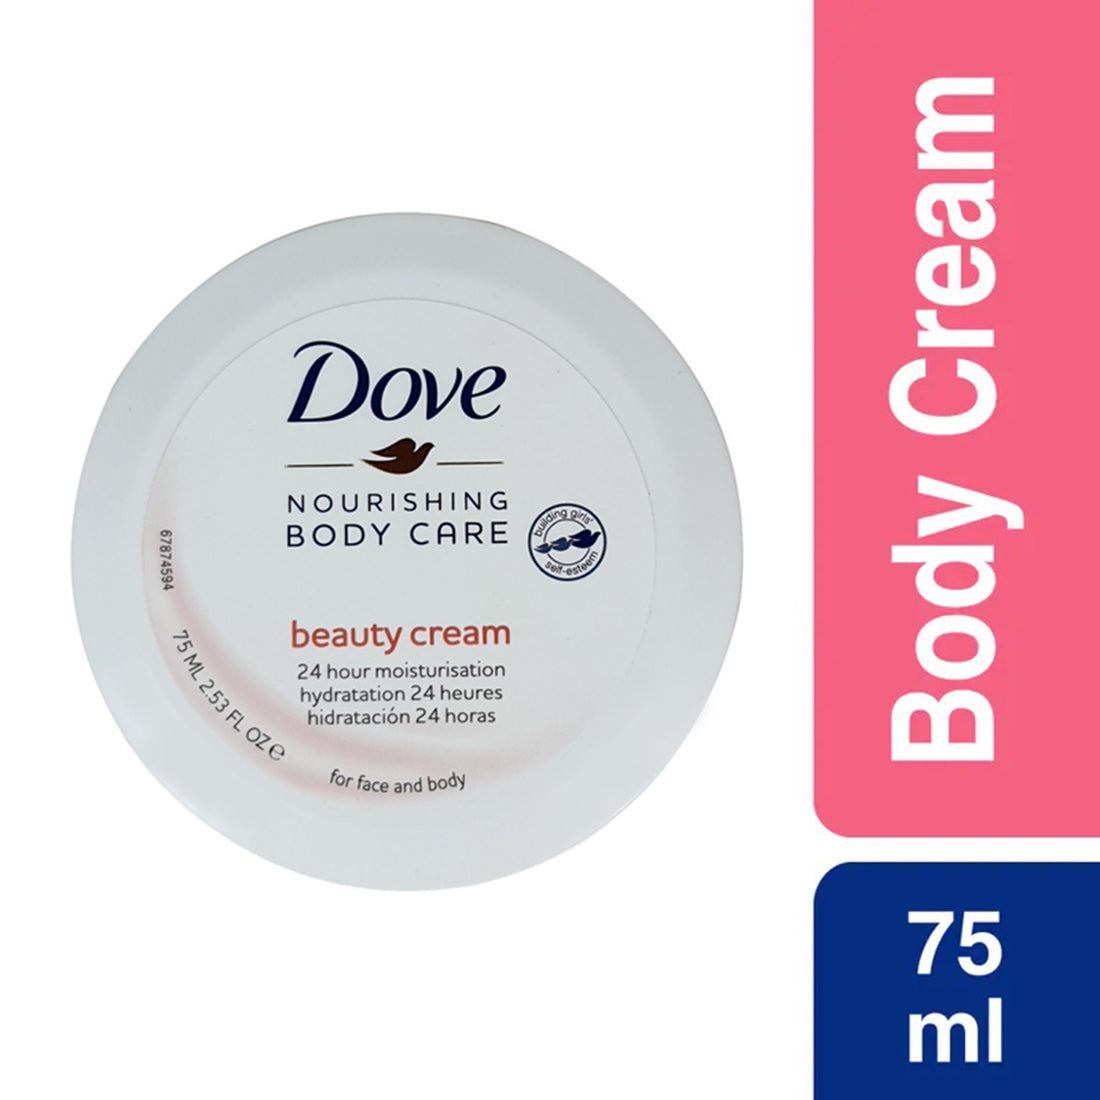 Dove Nourishing Body Care Beauty Cream (75ml)